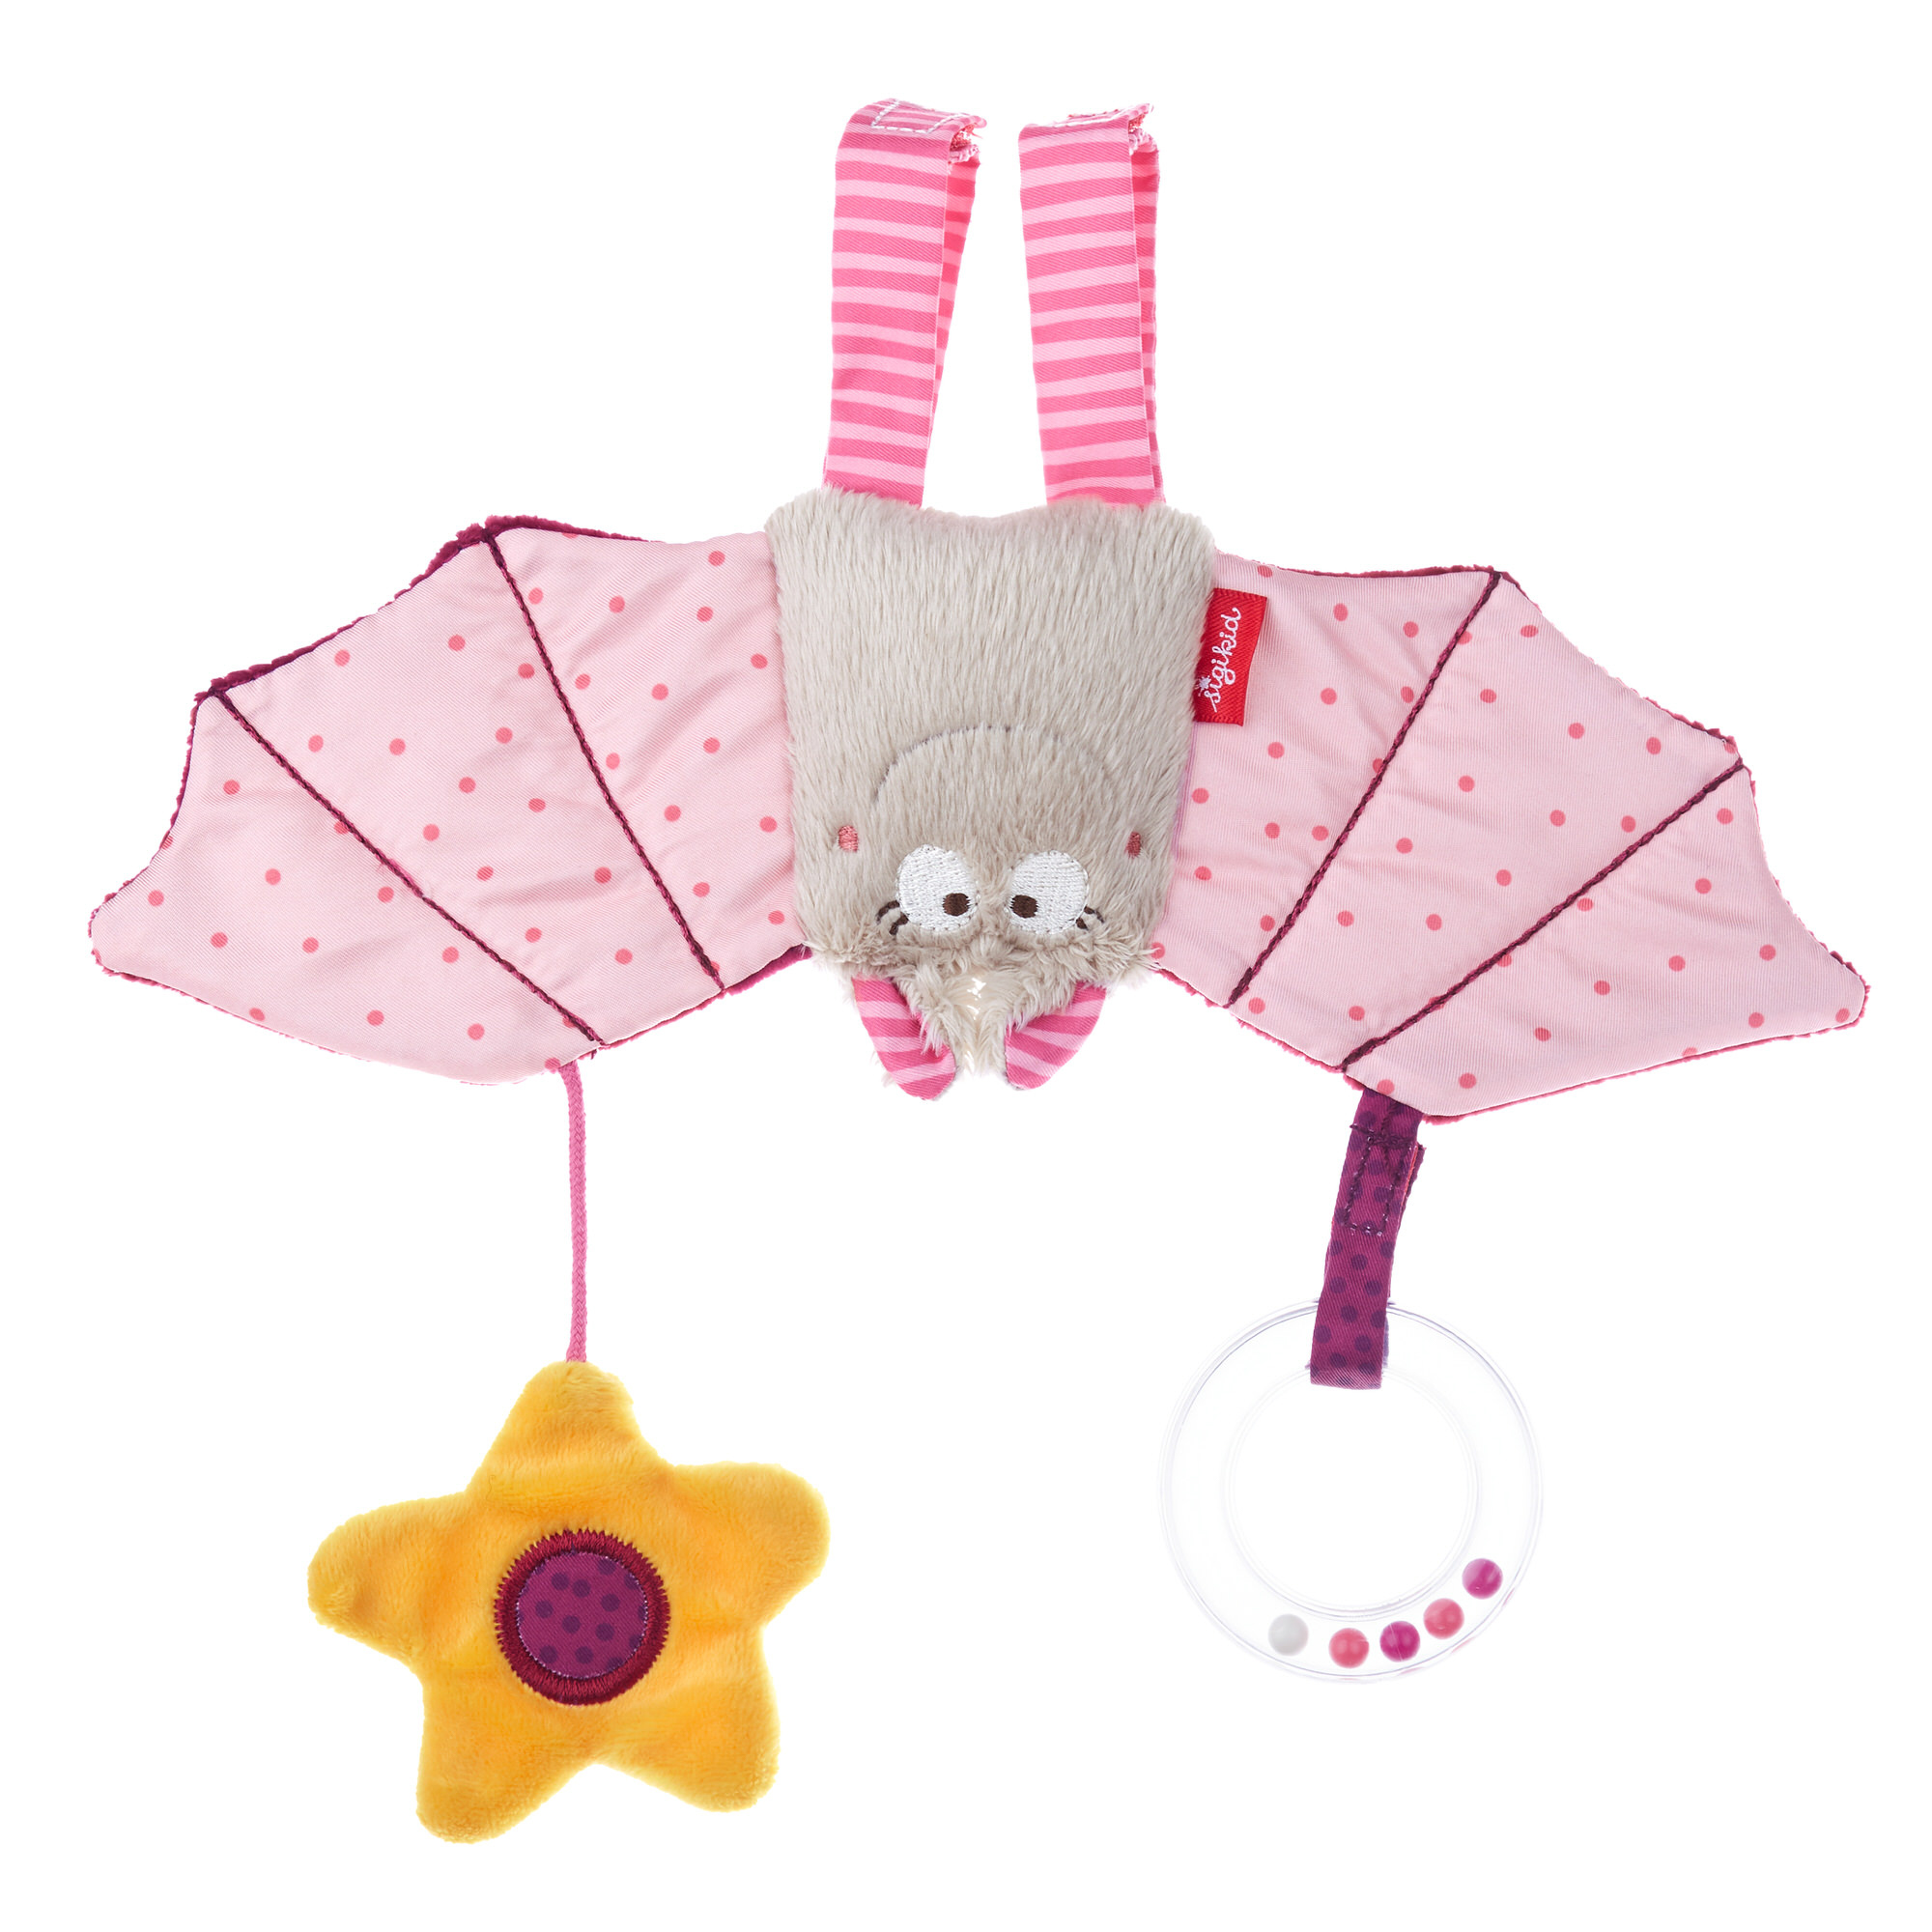 Cute hanging baby toy bat